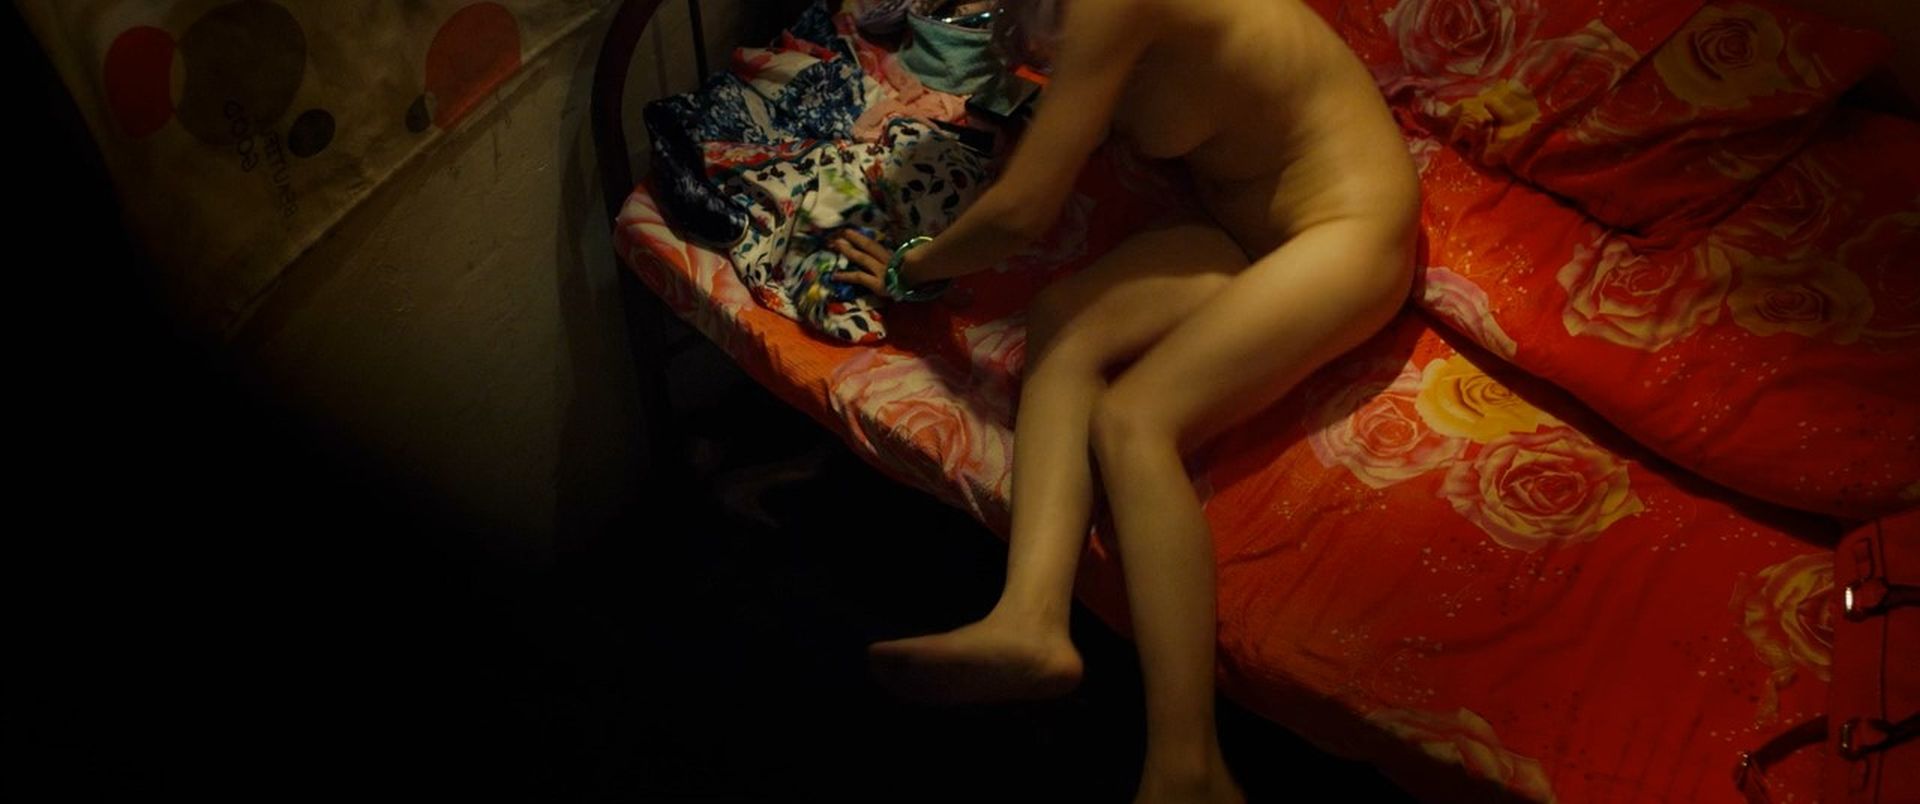 Irene Wan nude pics.